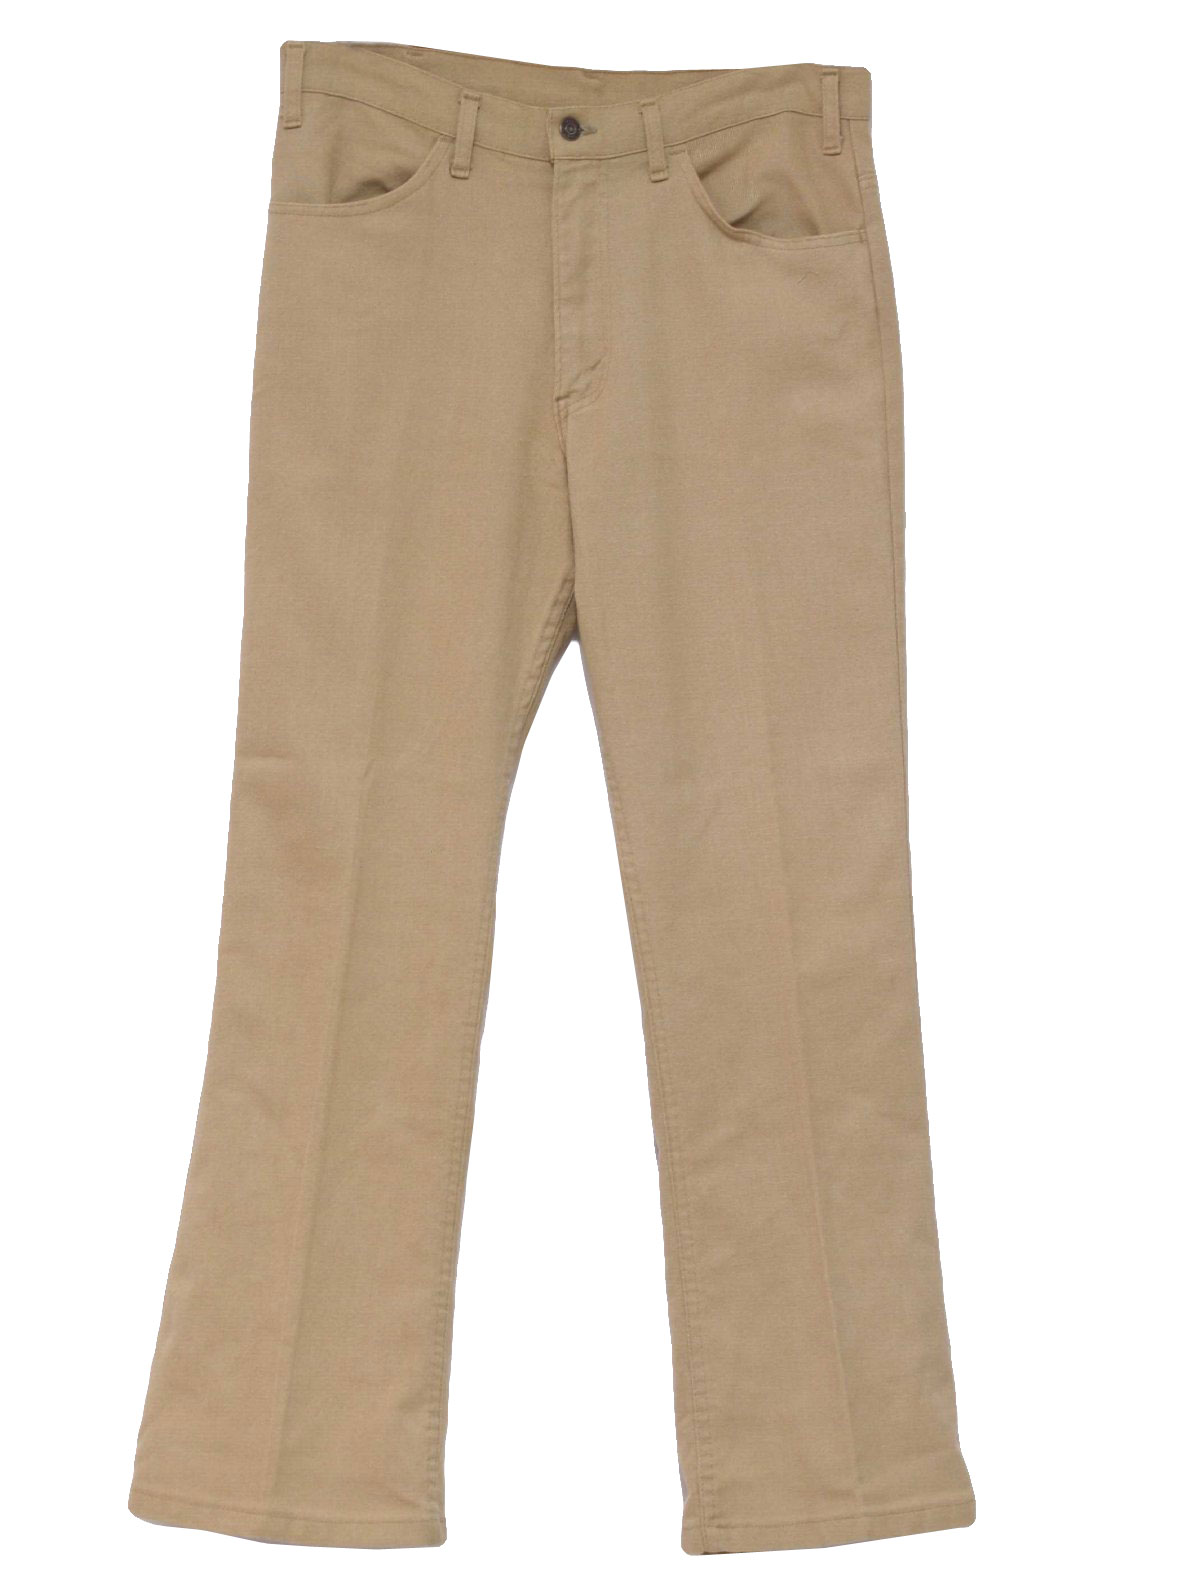 70's Vintage Flared Pants / Flares: 70s -Levis Sta Prest- Mens tan ...